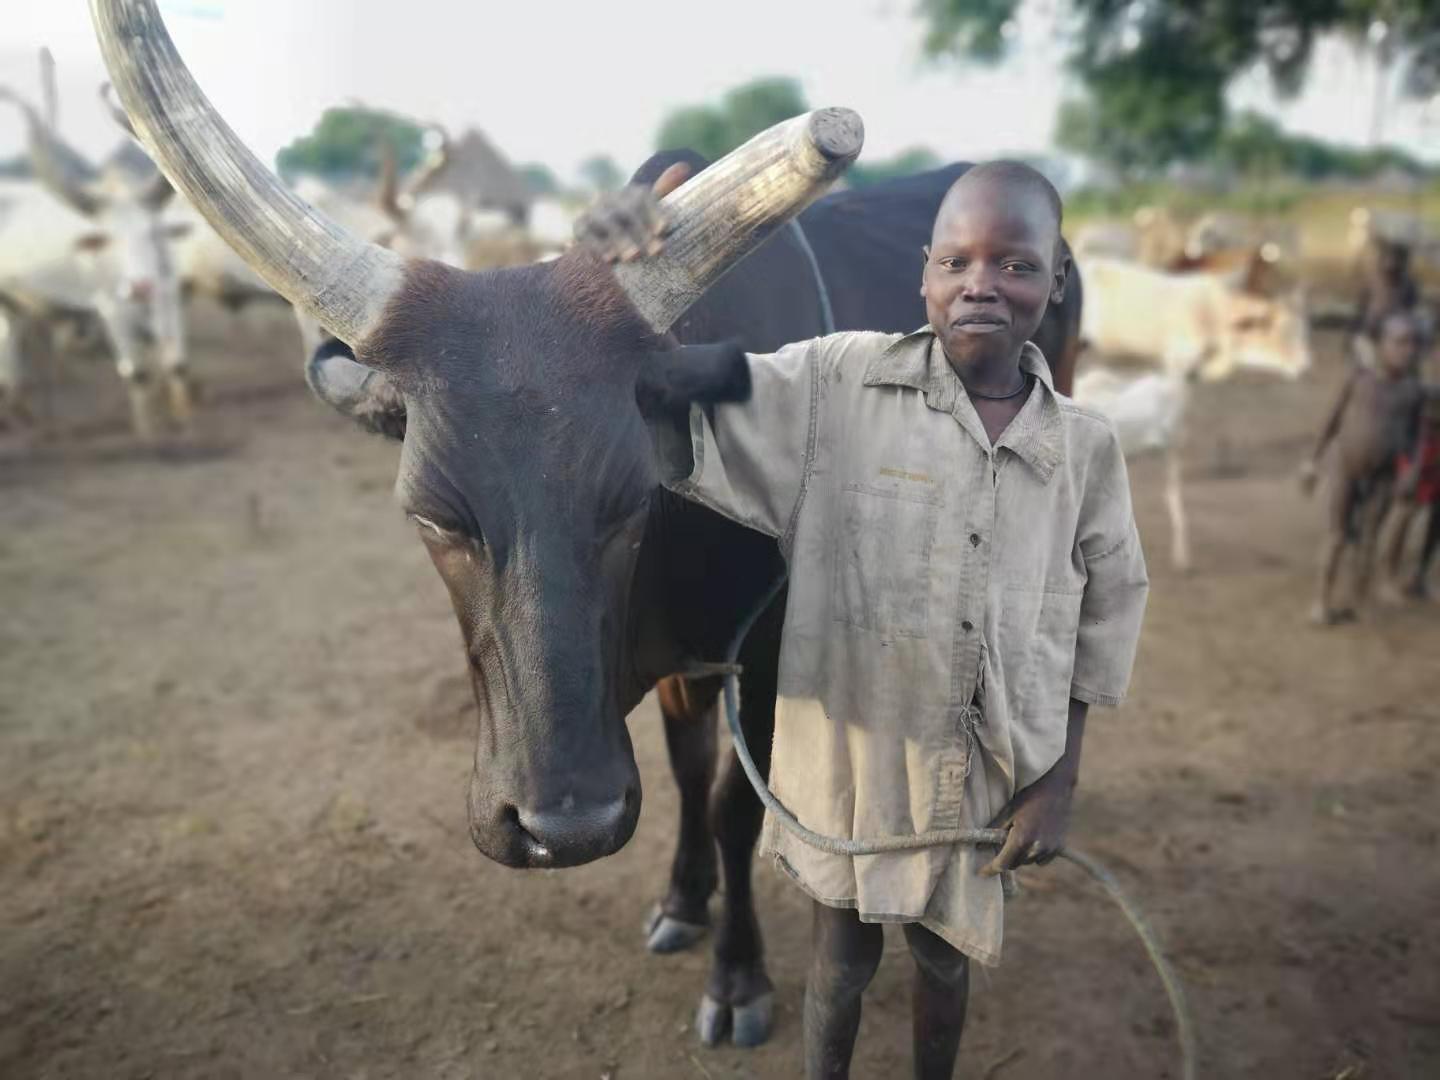 A mundari boy standing proud next to his cow